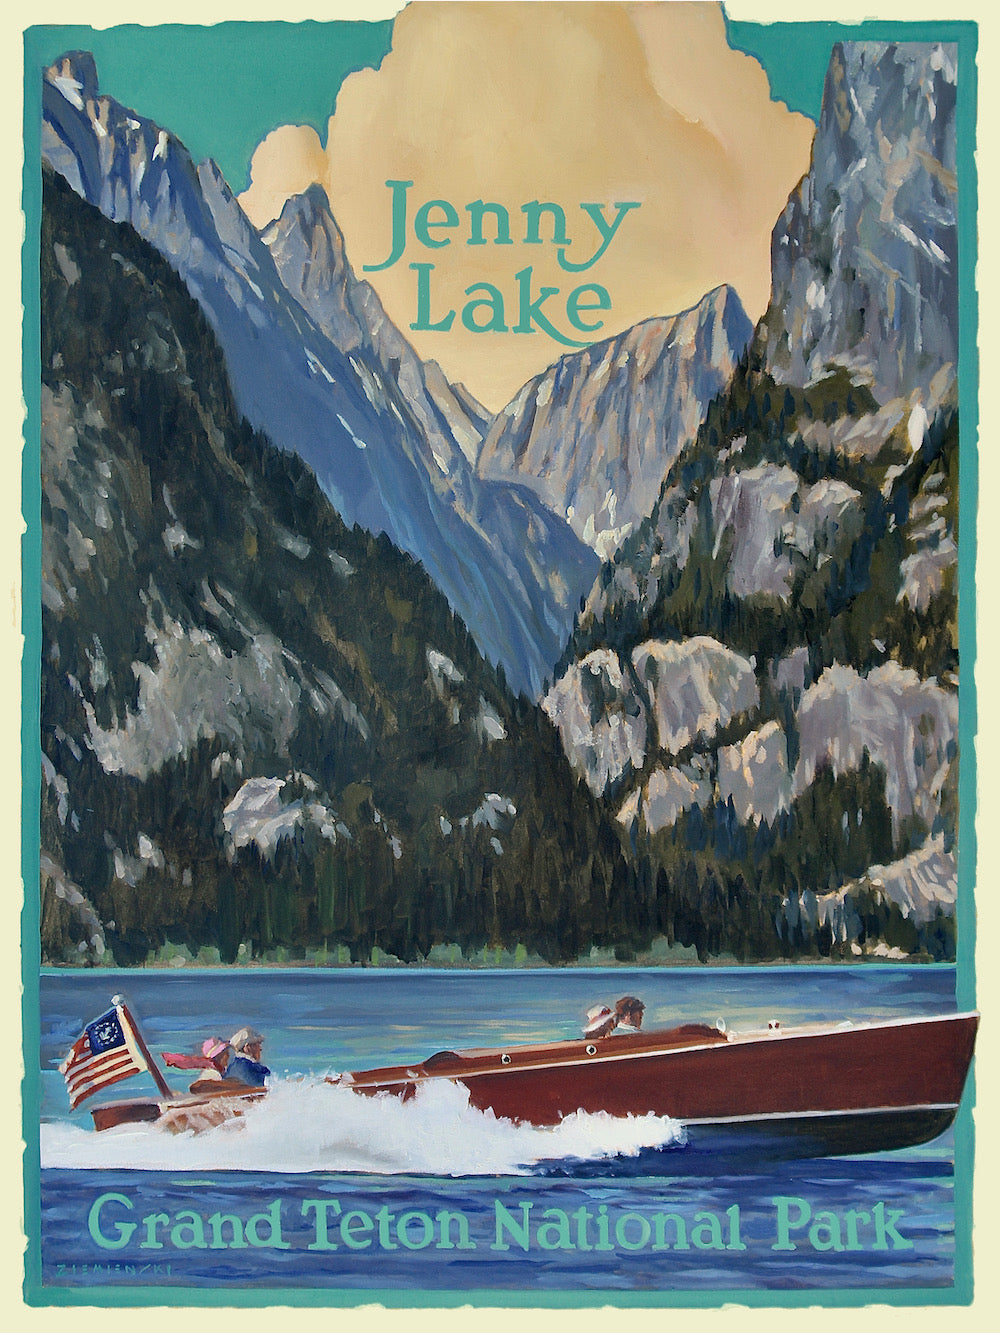 Traveling to Jenny Lake